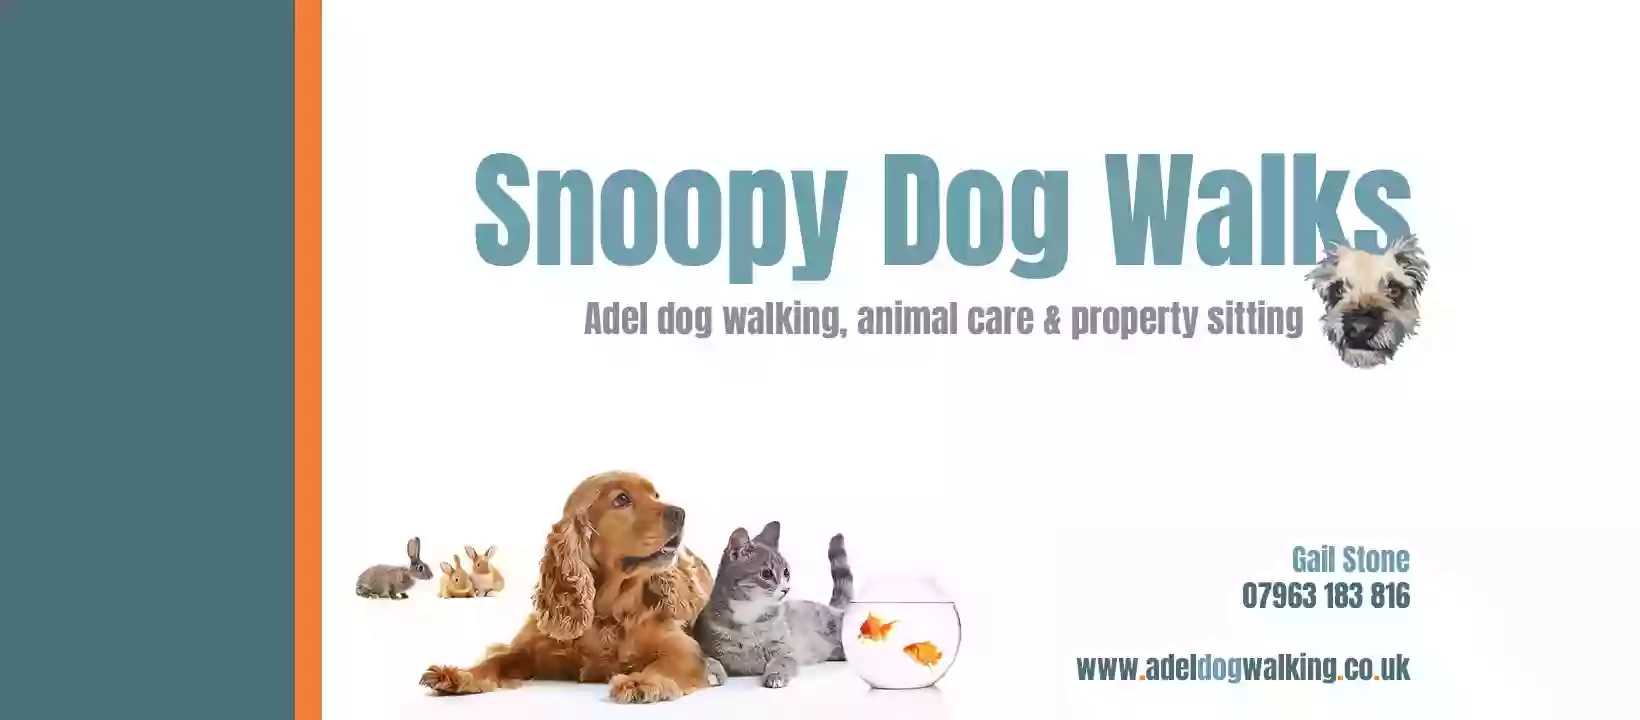 Adel Dog Walking and Animal Care